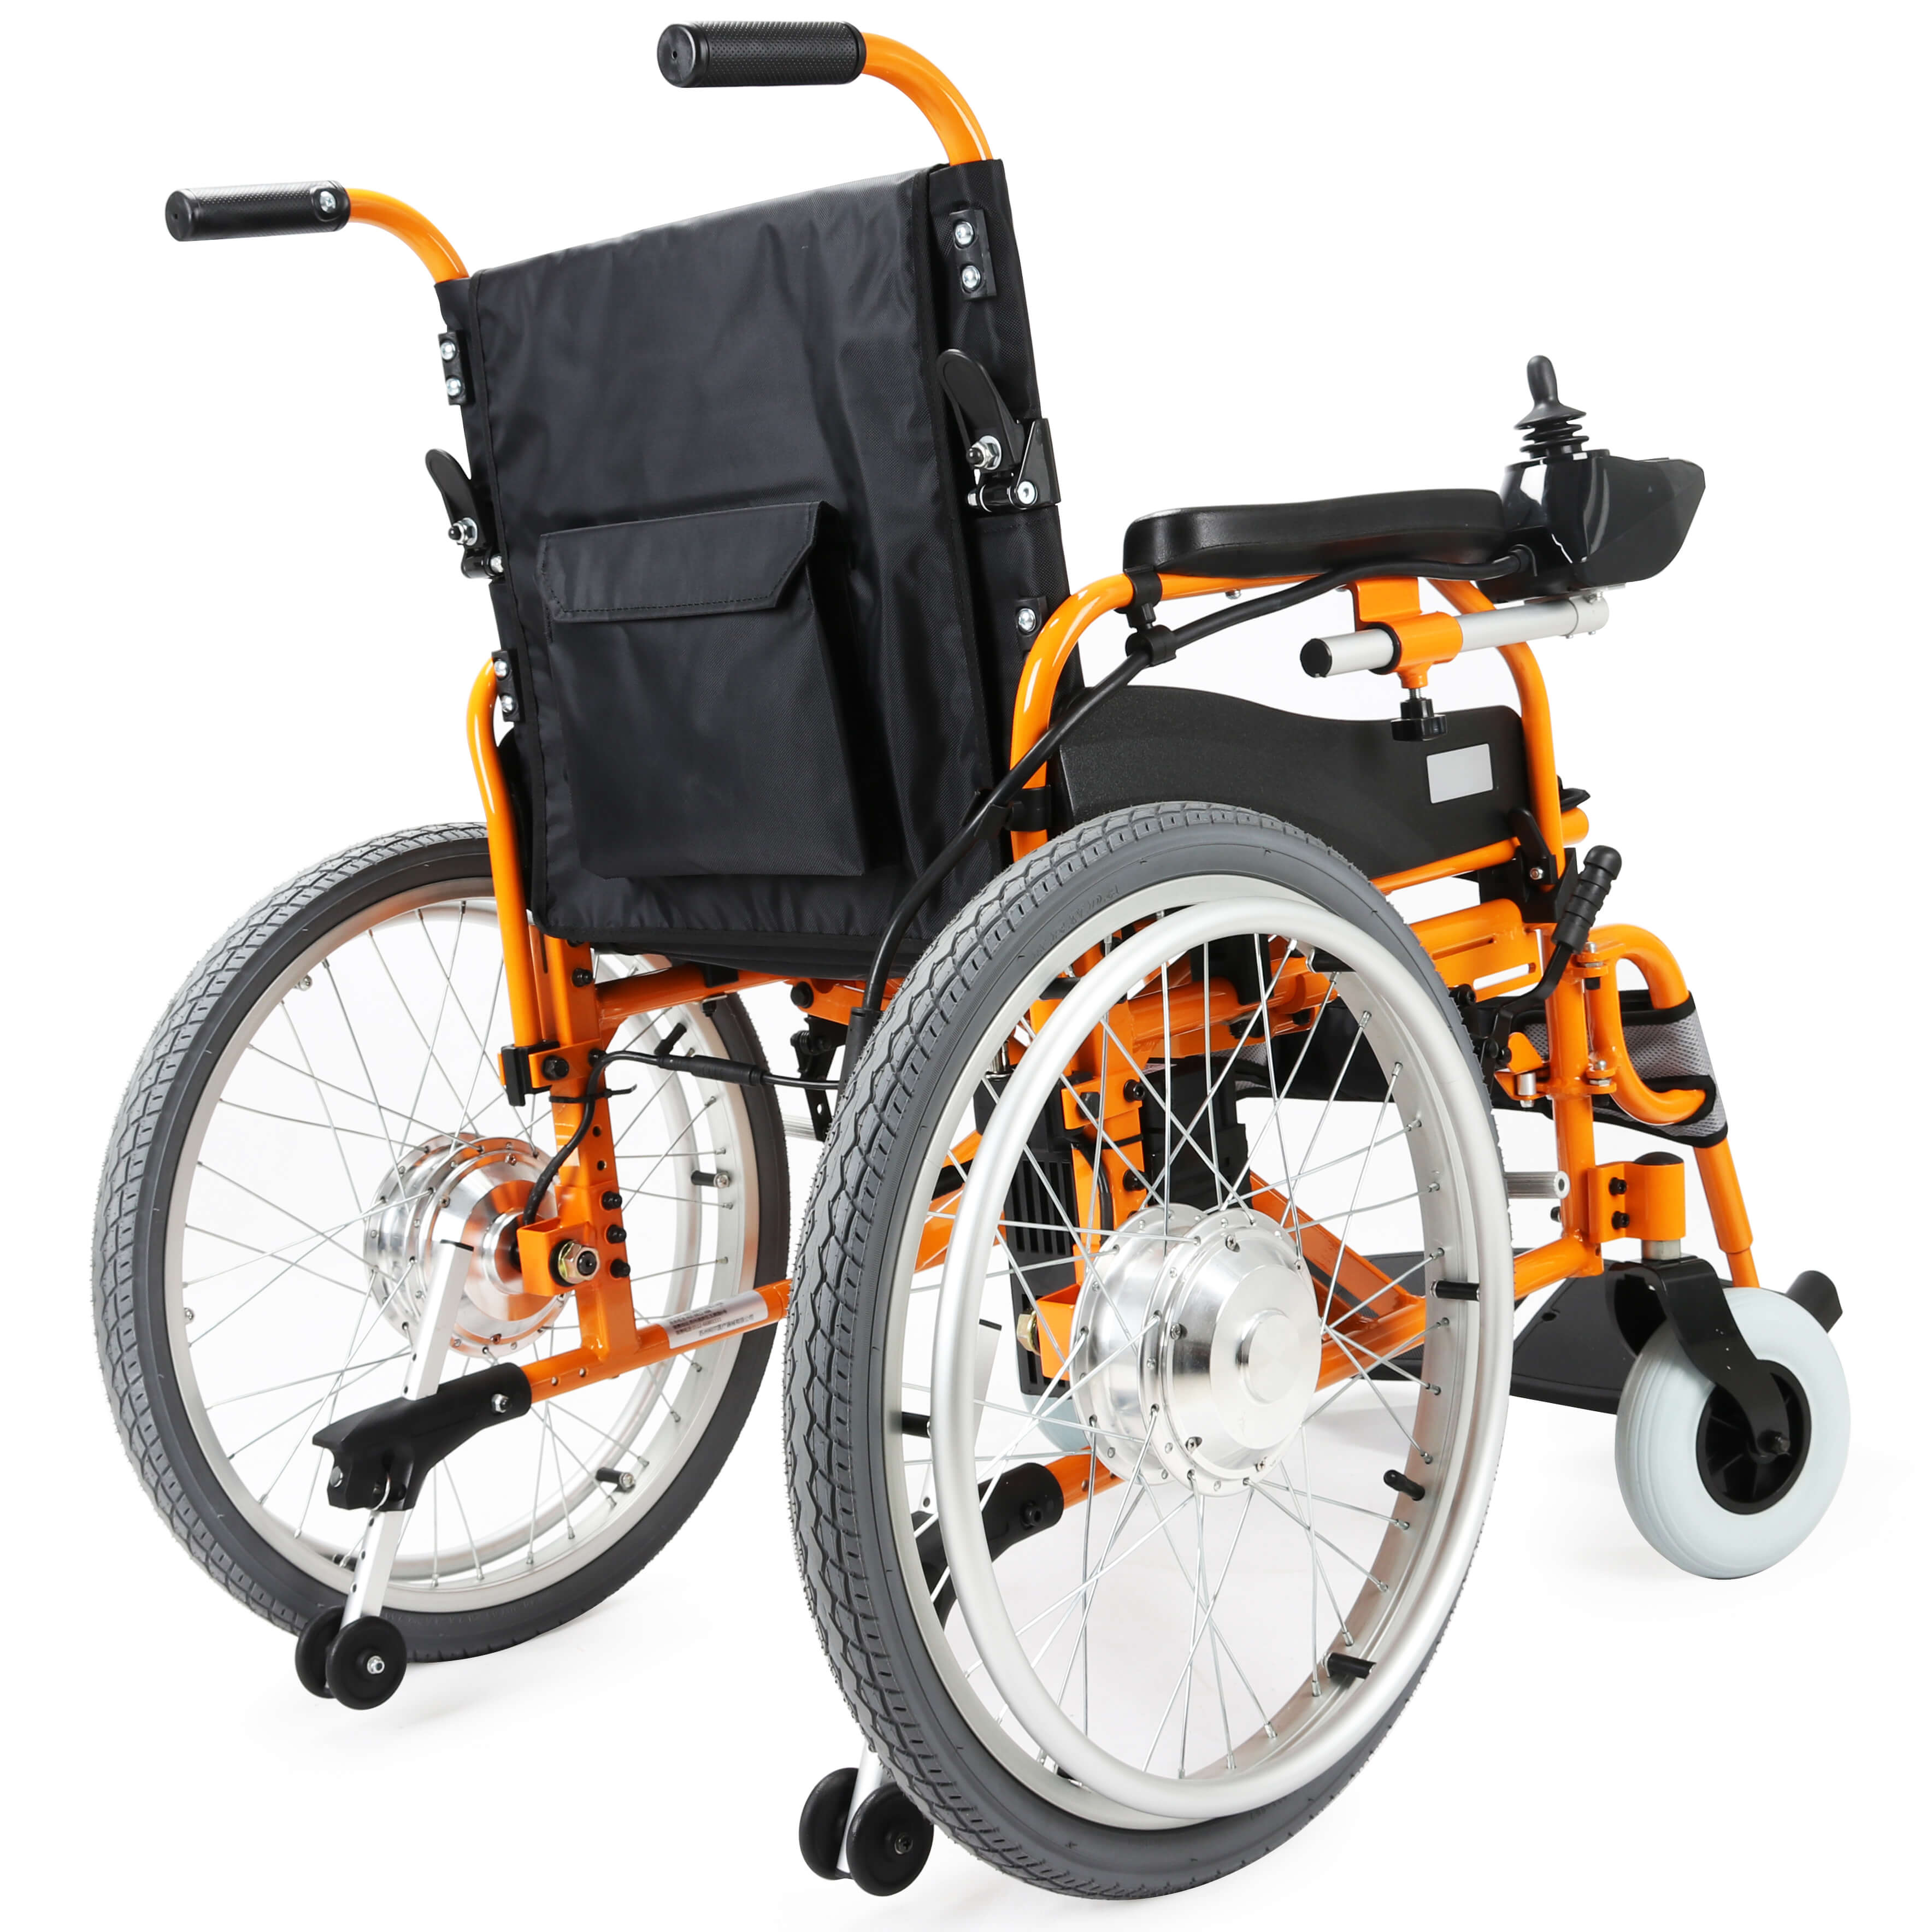 Es bueno elegir baterías de plomo-ácido para sillas de ruedas eléctricas o baterías de litio.